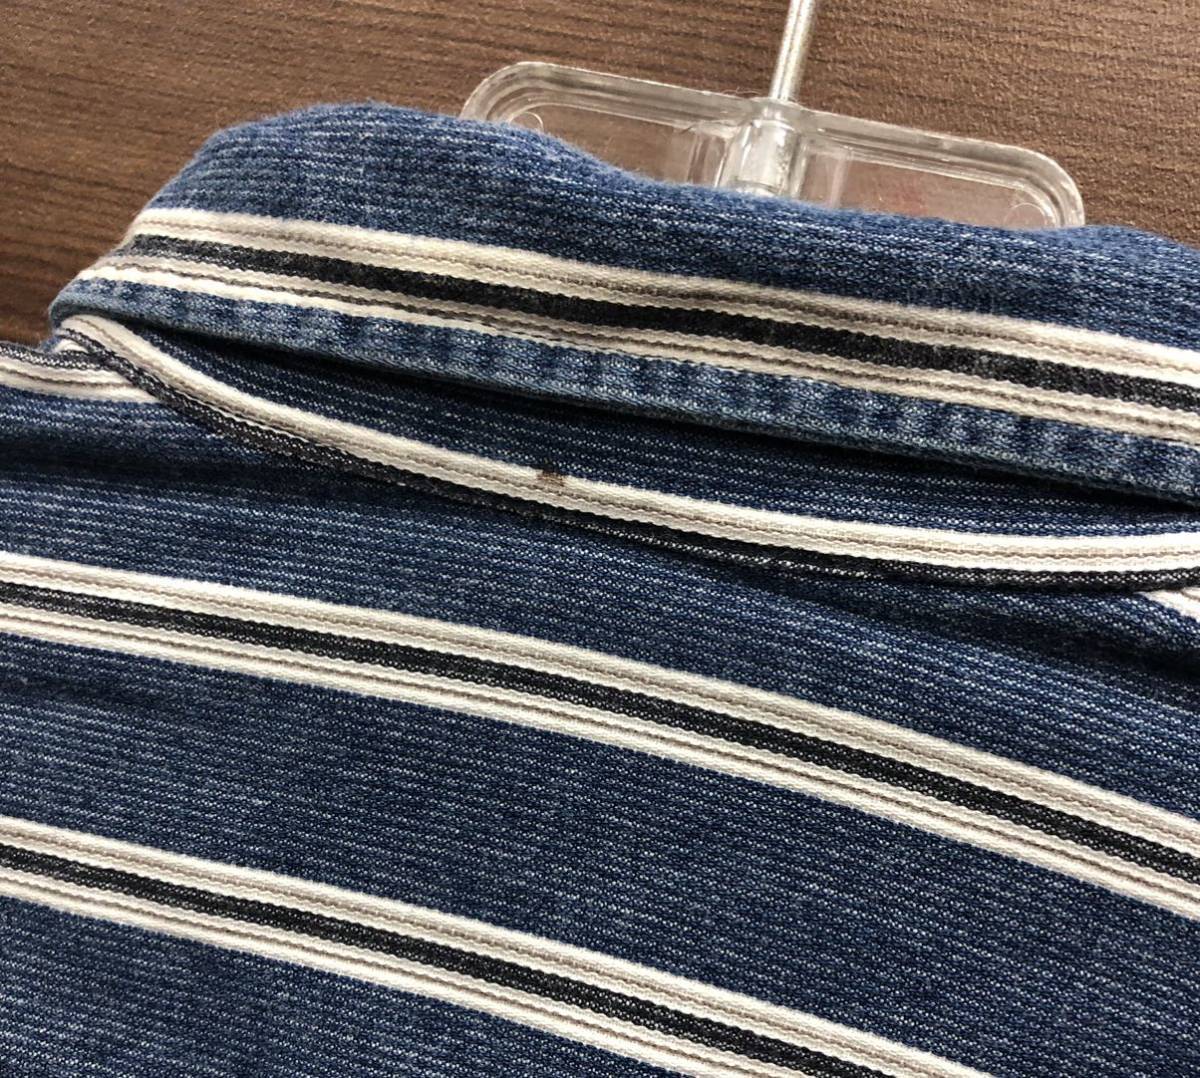 LLBean L e ruby n! stripe shirt M size cotton 100% big shirt long sleeve shirt 